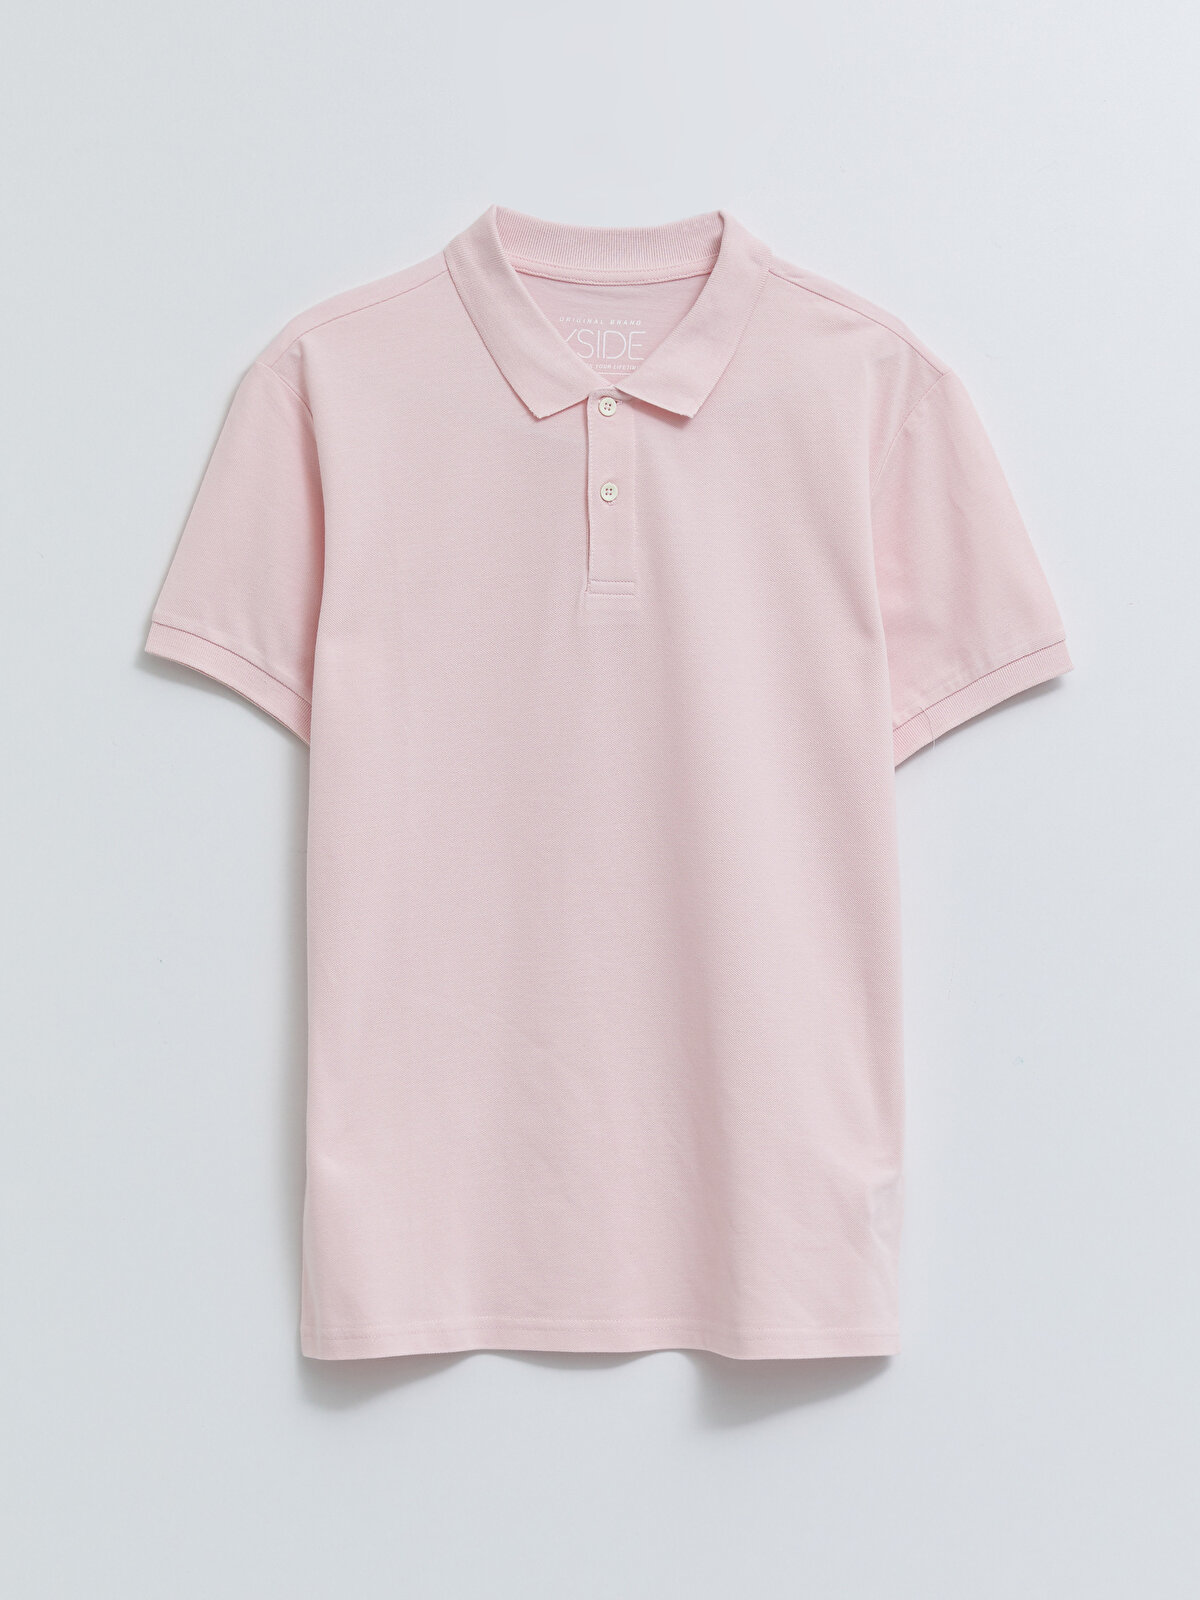 XSIDE Polo Neck Short Sleeve Pique Men's T-Shirt -S2HU07Z8-S57 